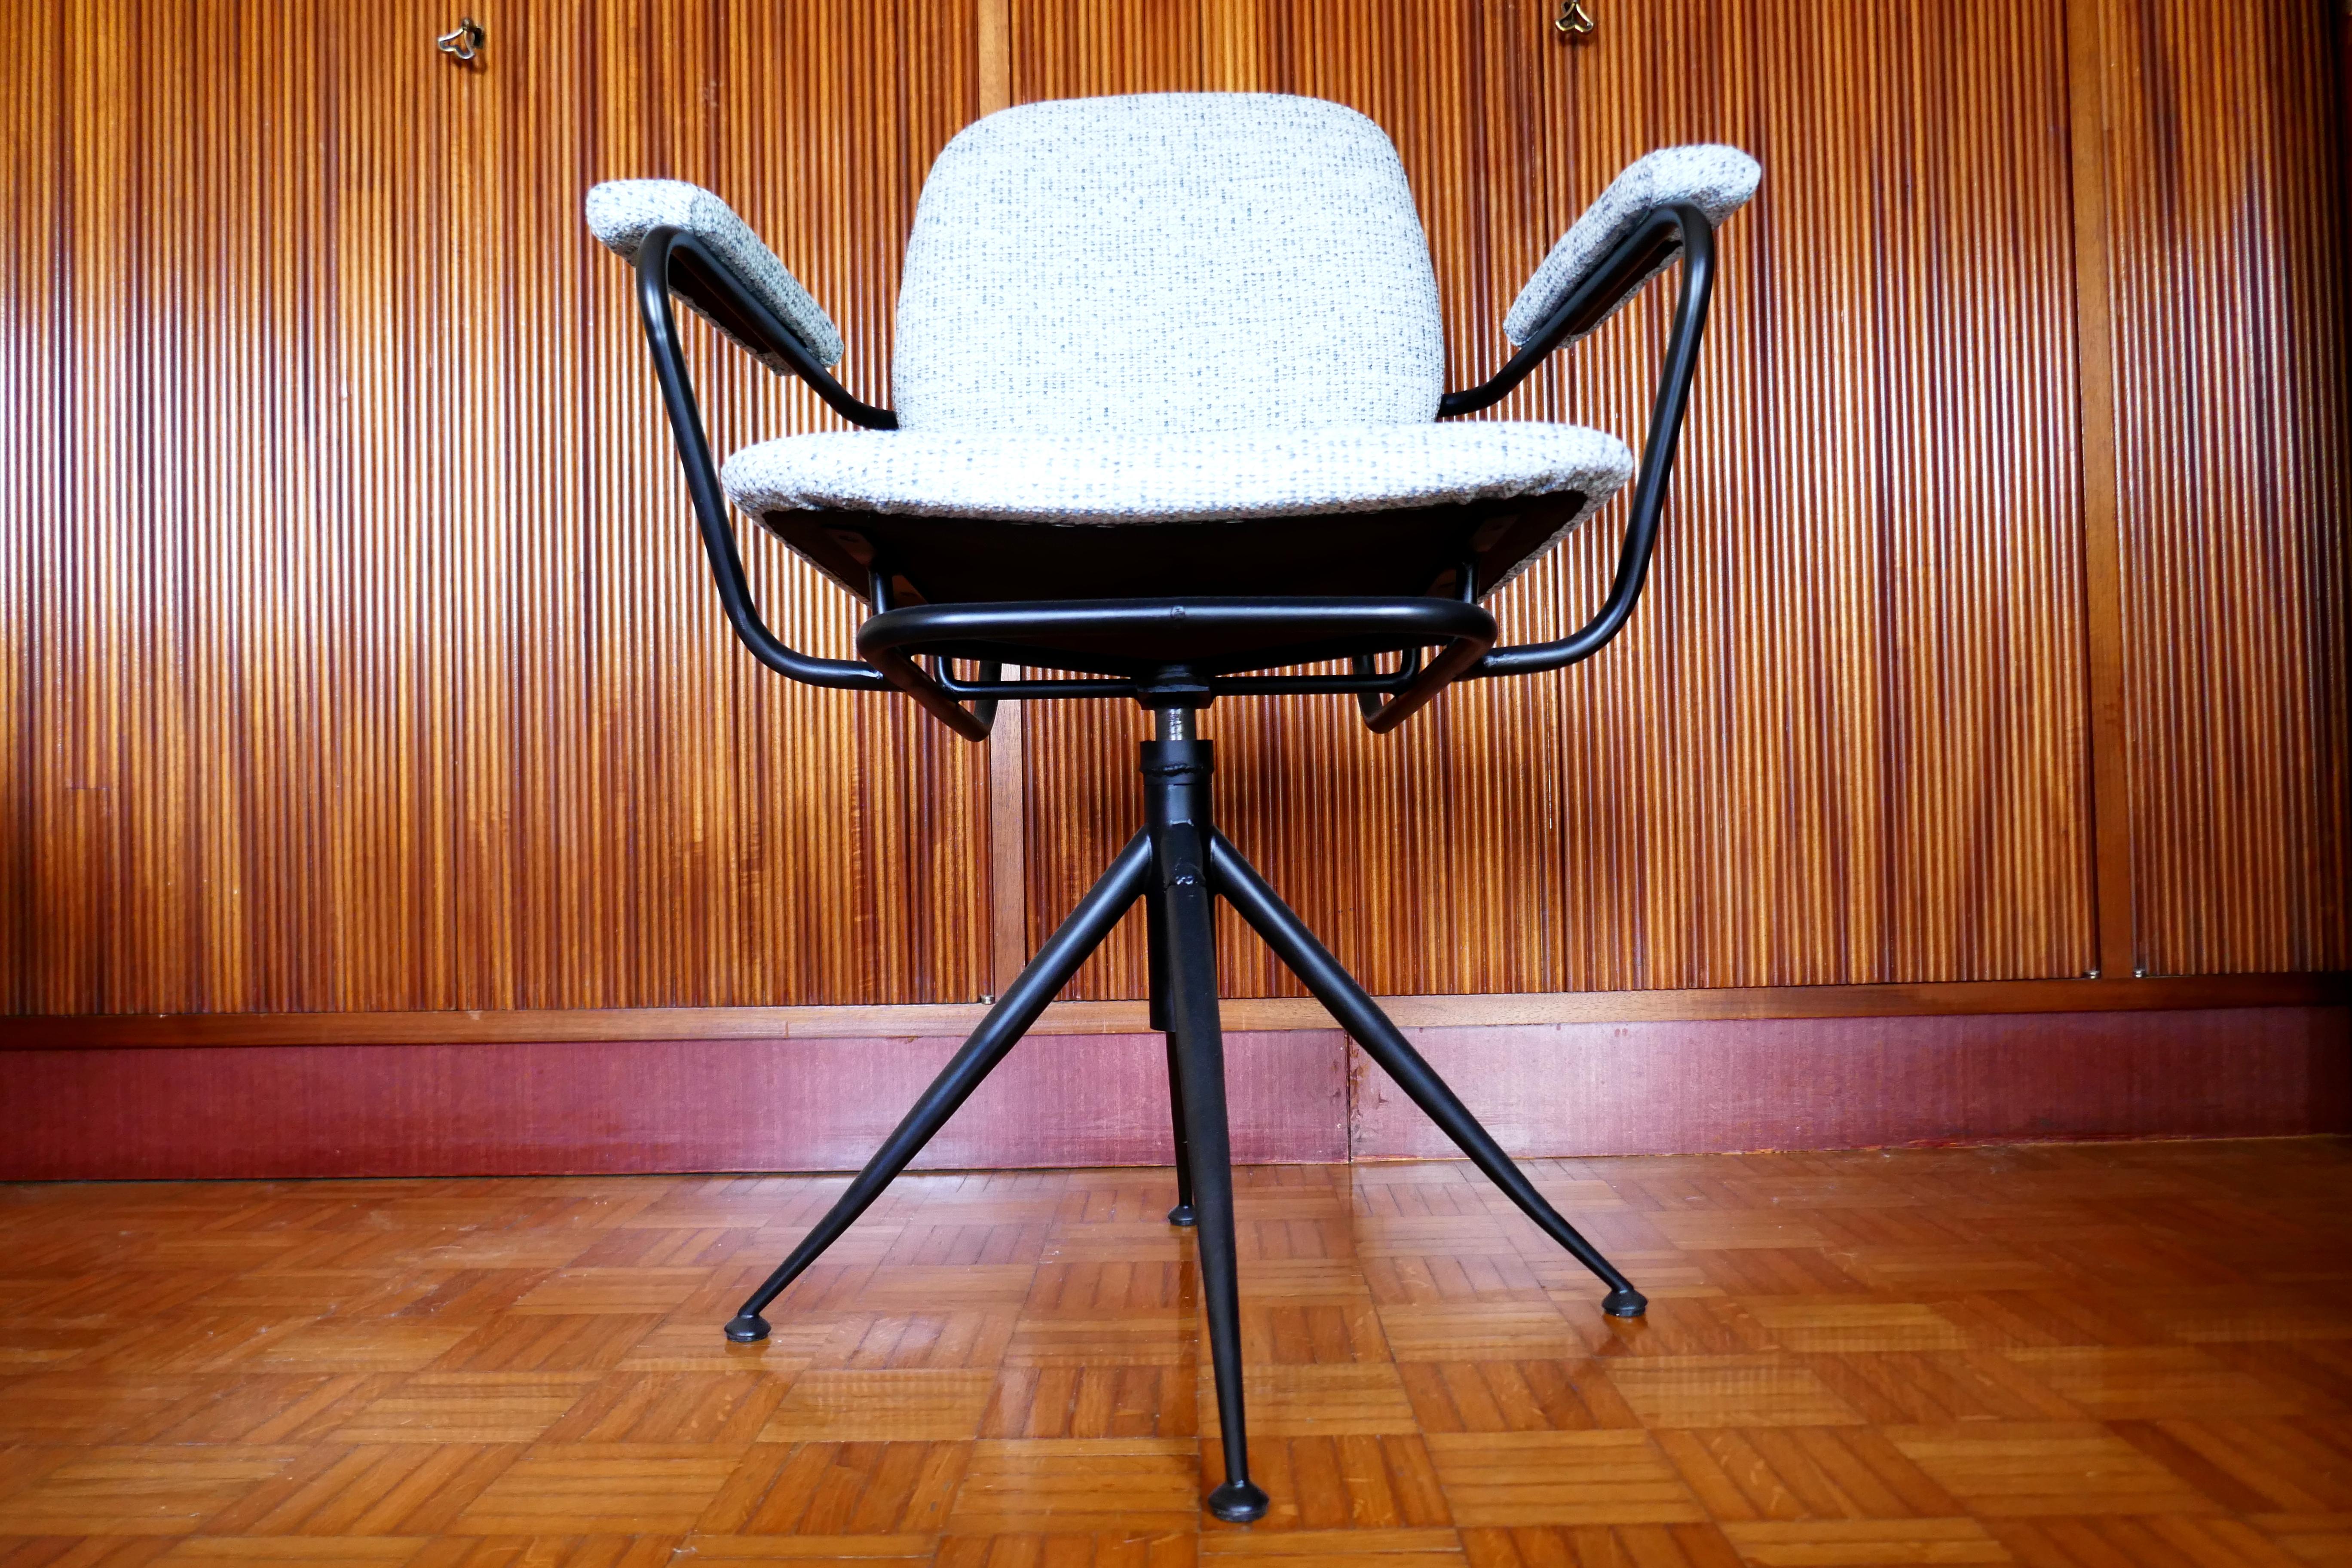 Swivel chair possible design by Gastone Rinaldi for Rimadesio.
Restored
Thank you